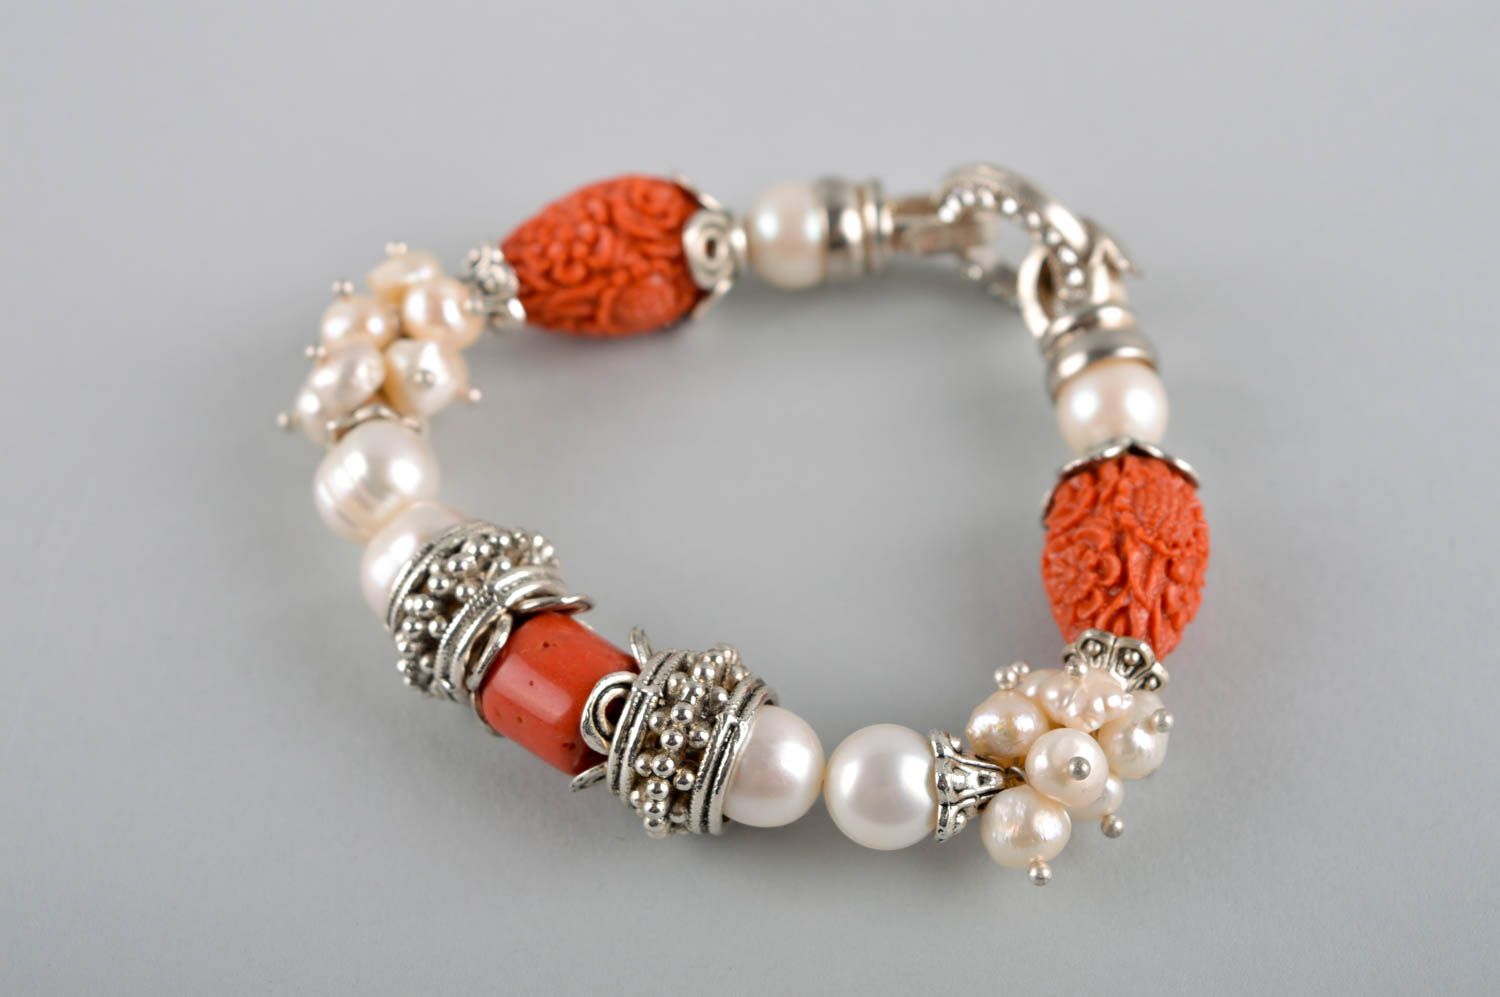 Handmade stylish cute bracelet unusual wrist bracelet natural stone jewelry photo 2